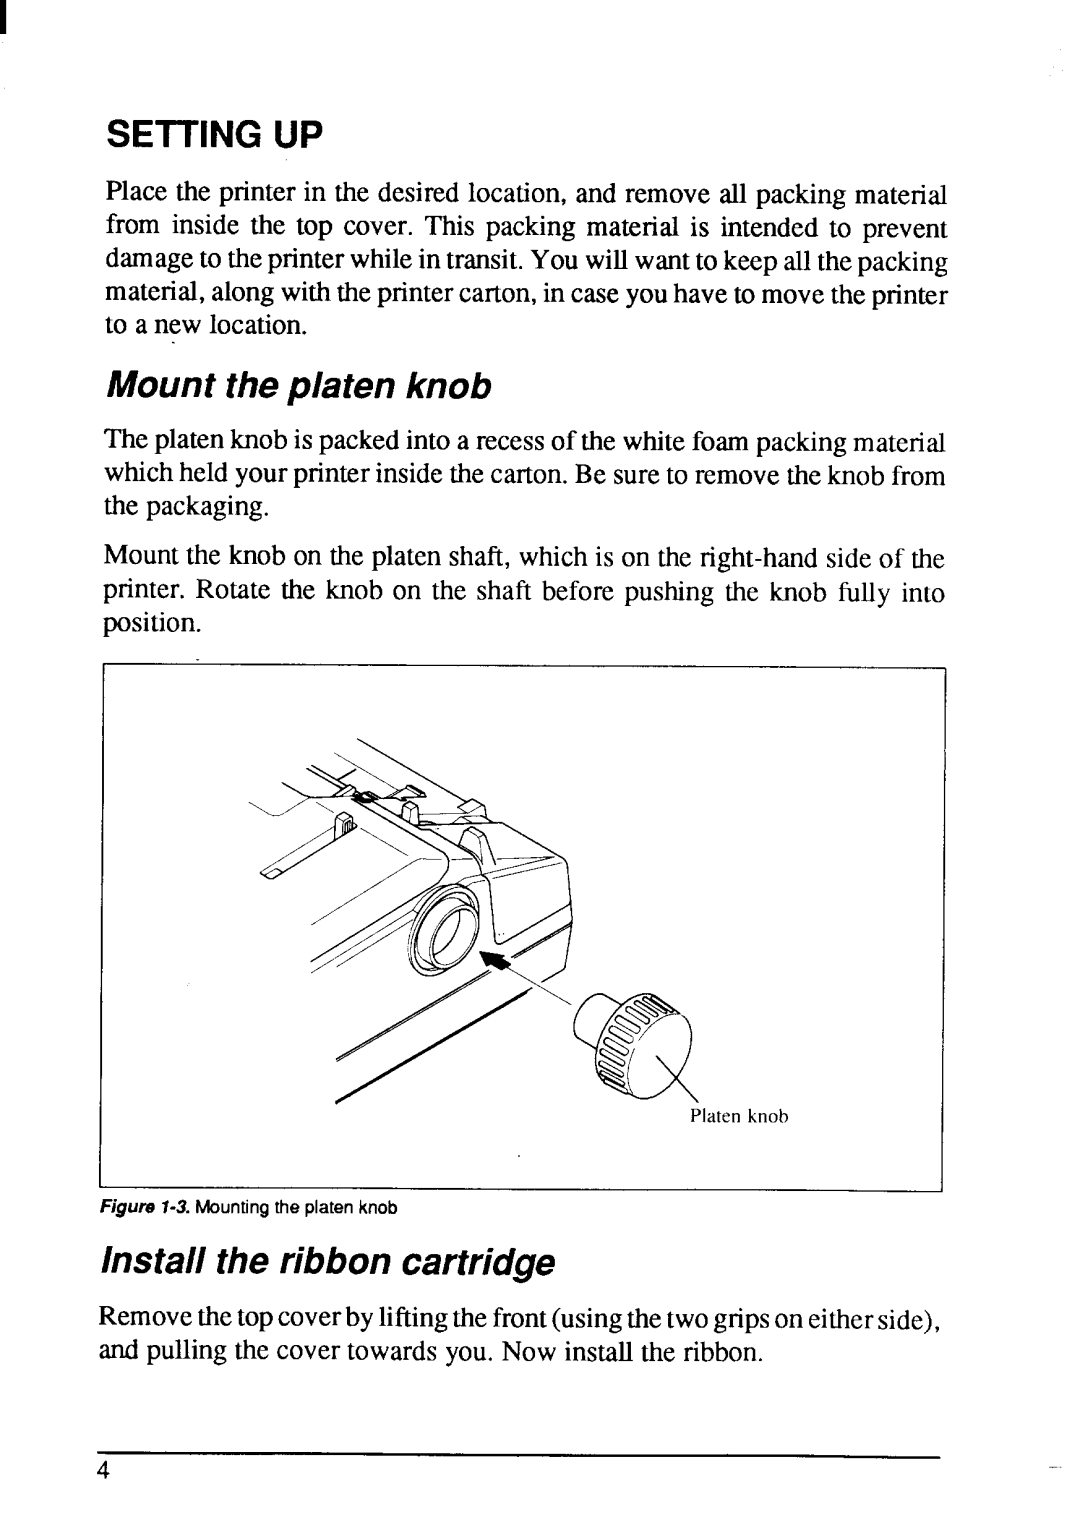 Star Micronics NX-1001 manual Mounttheplaten knob, Install the ribboncartridge 